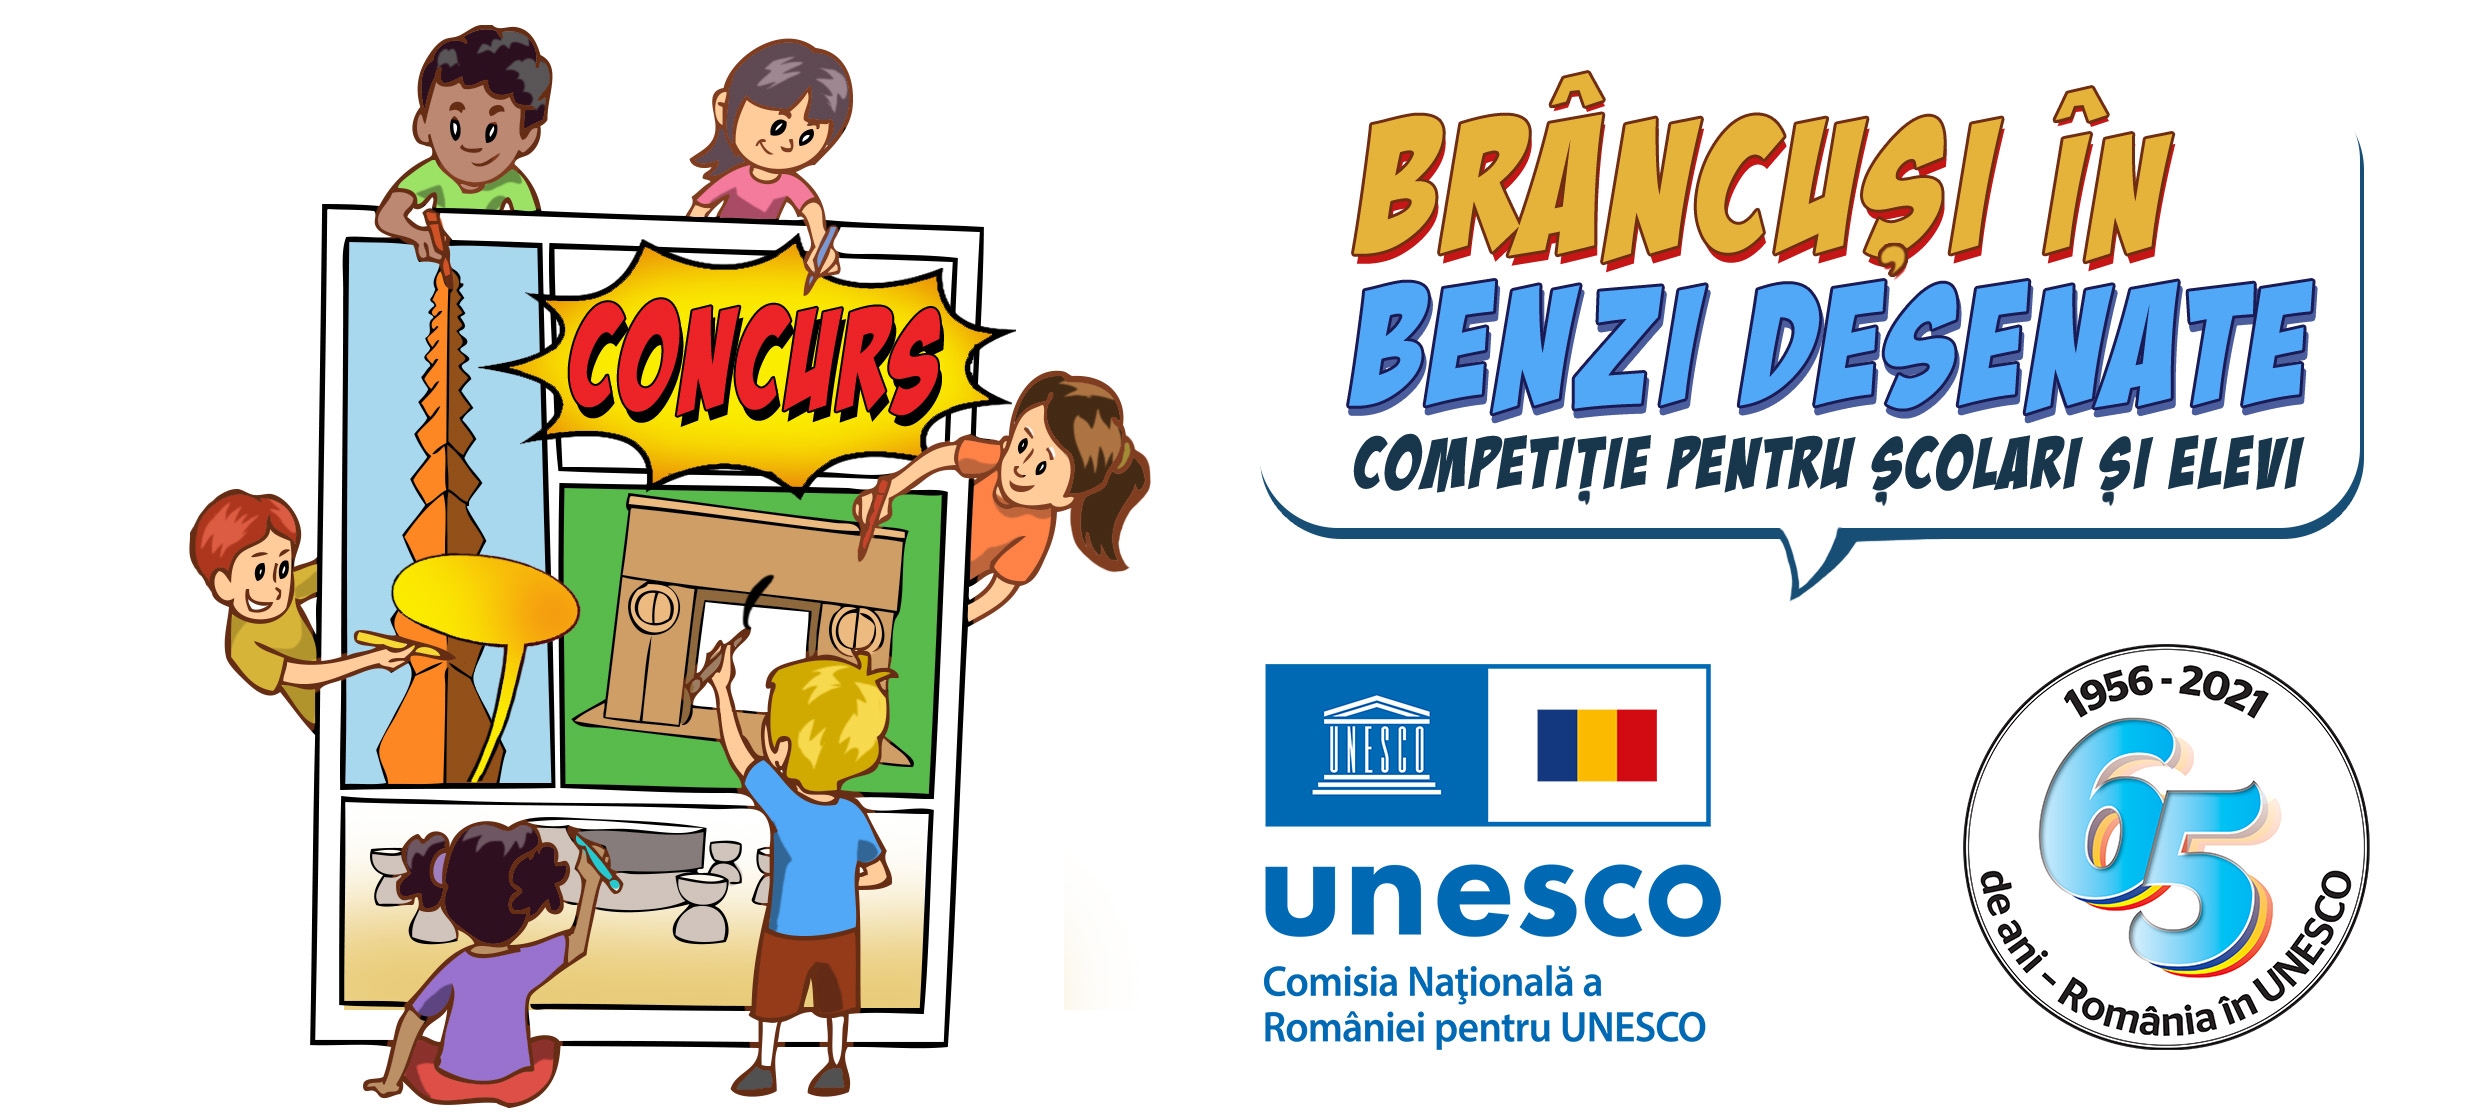 Comics Contest dedicated to the great sculptor Constantin Brâncuși